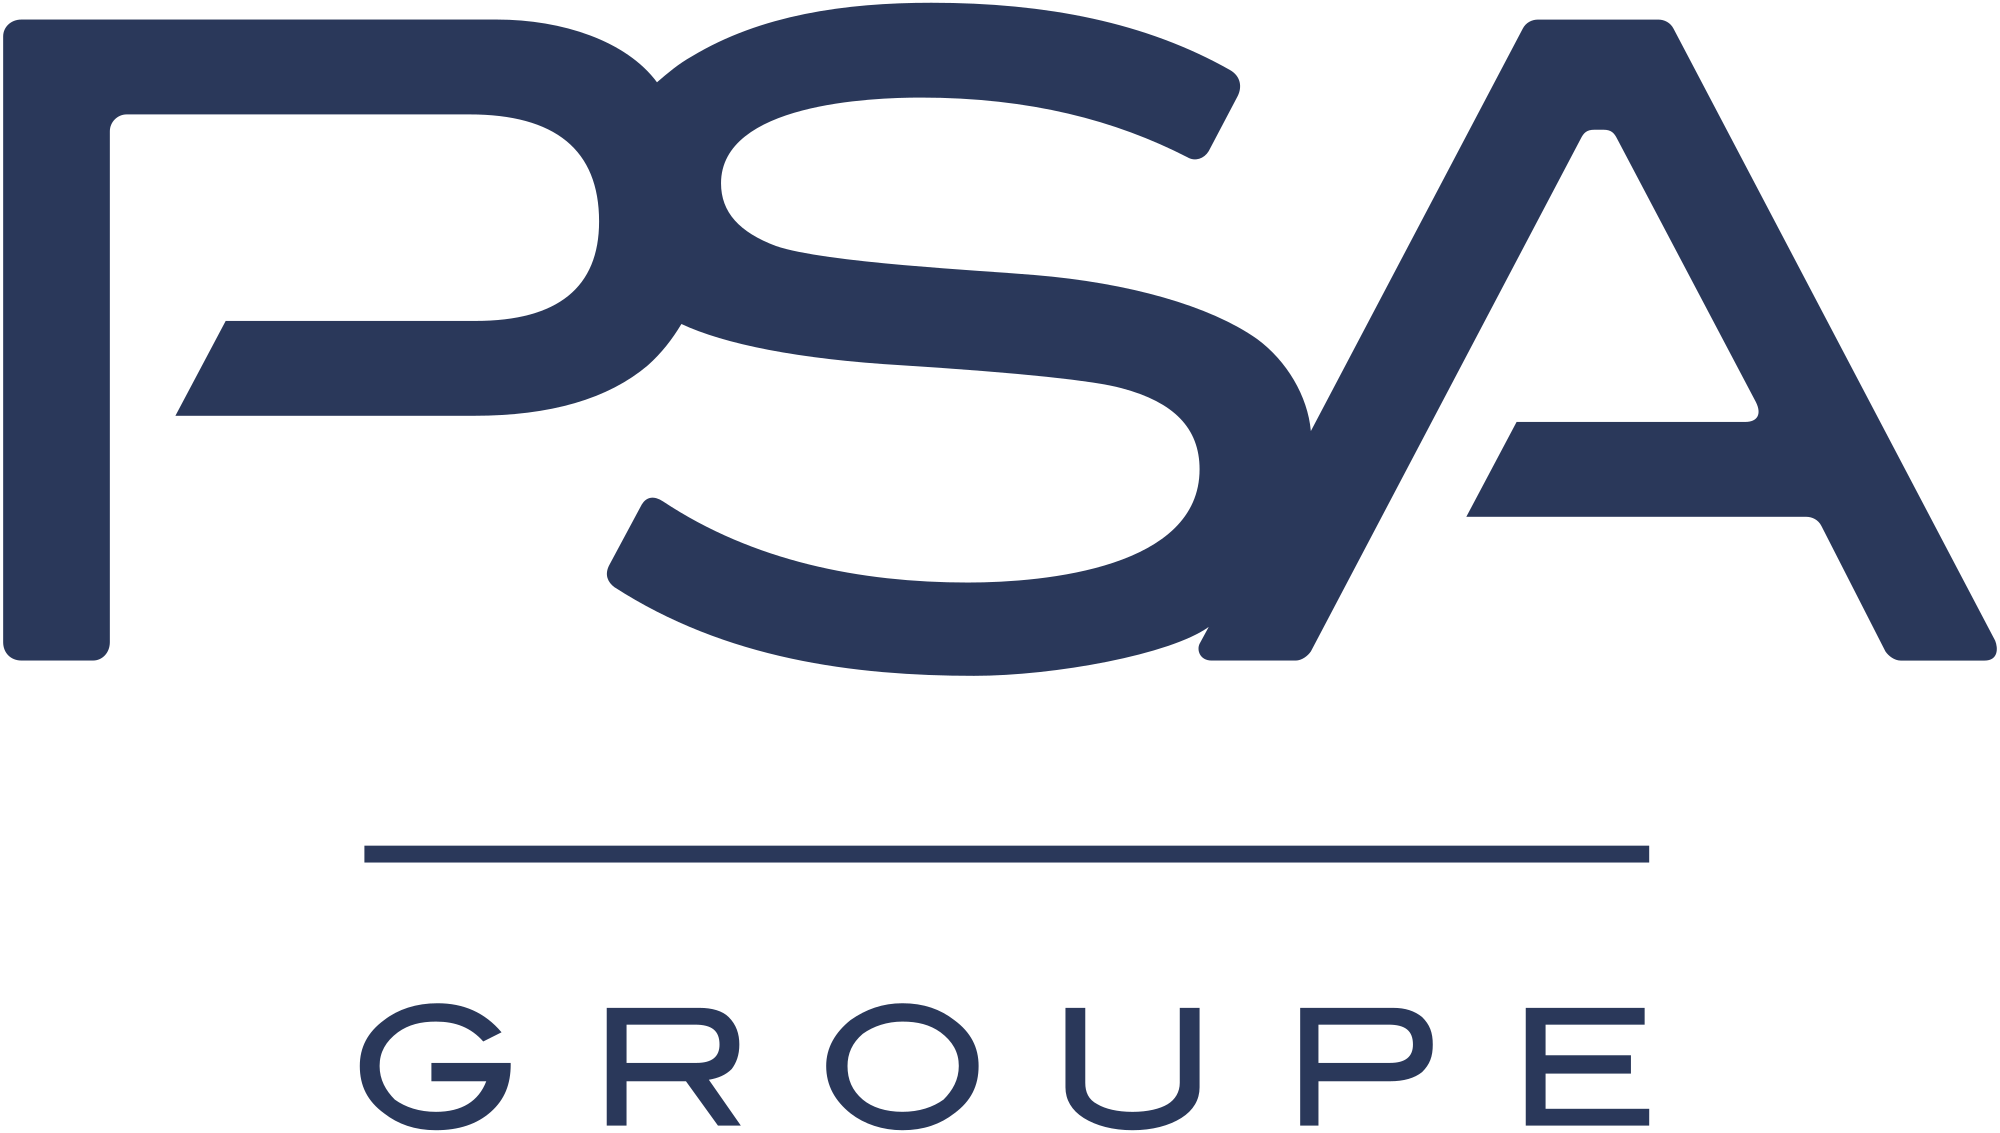 PSA Logo - File:Groupe PSA logo.svg - Wikimedia Commons